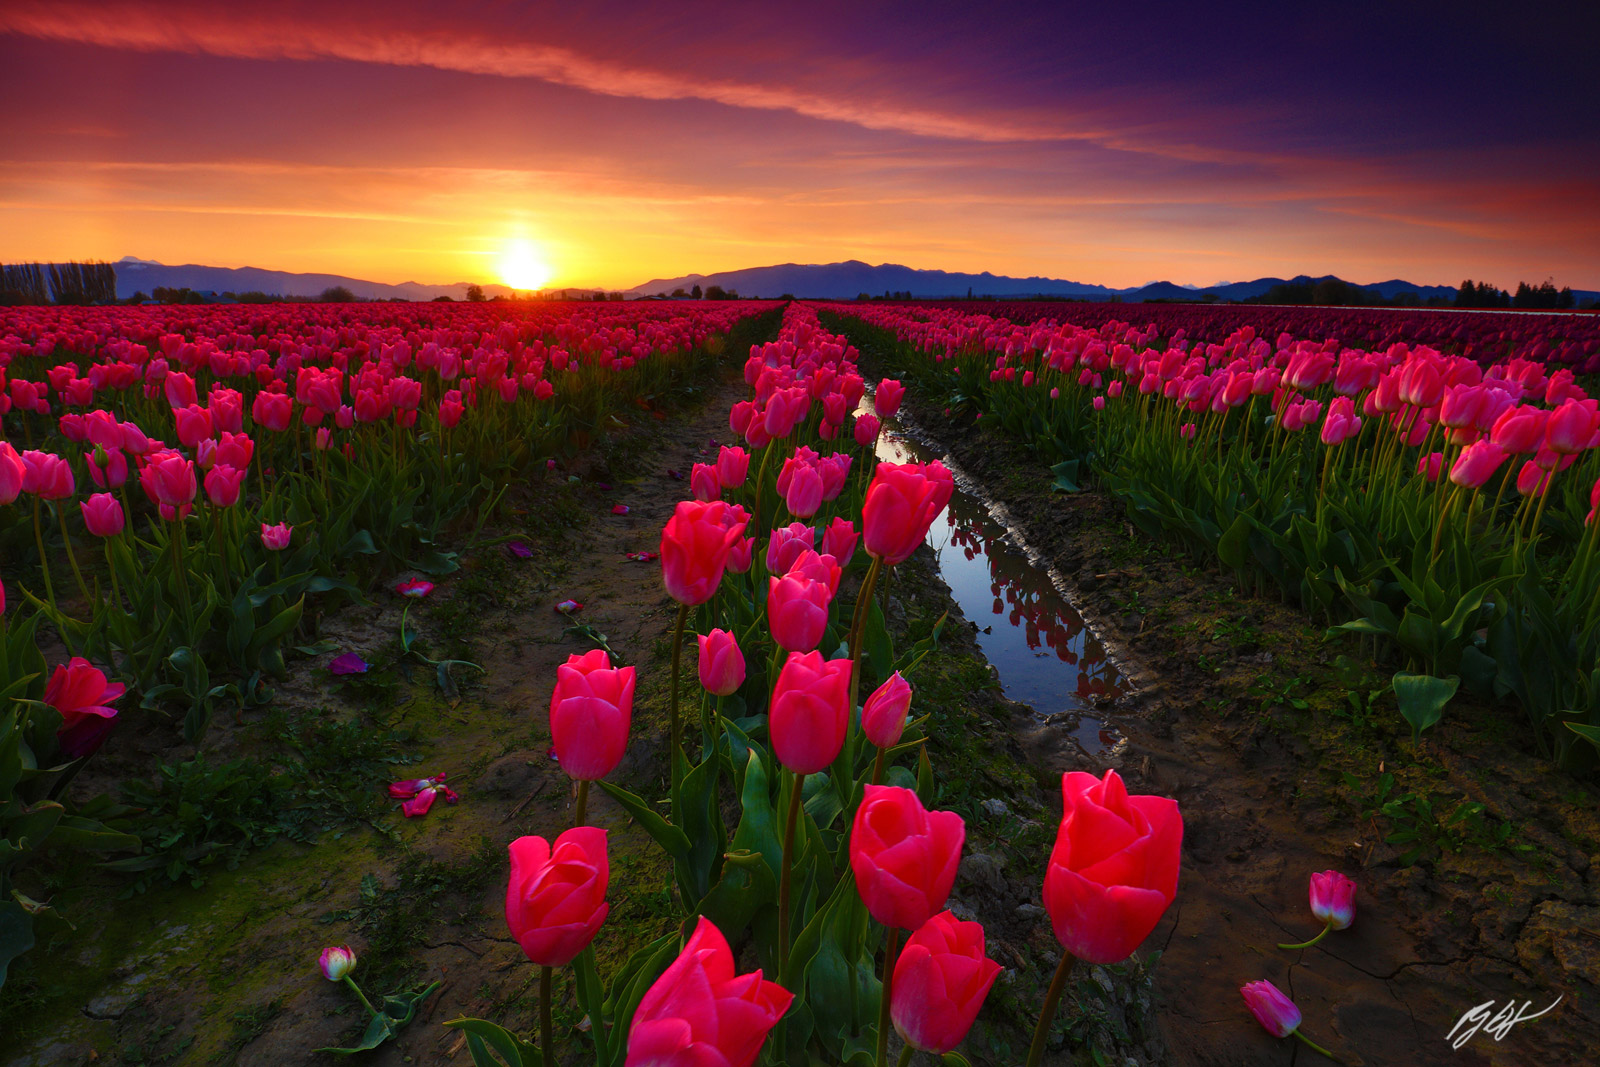 Sunrise over Roozengaarde Tulip Fields in Skagit Valley in Washington